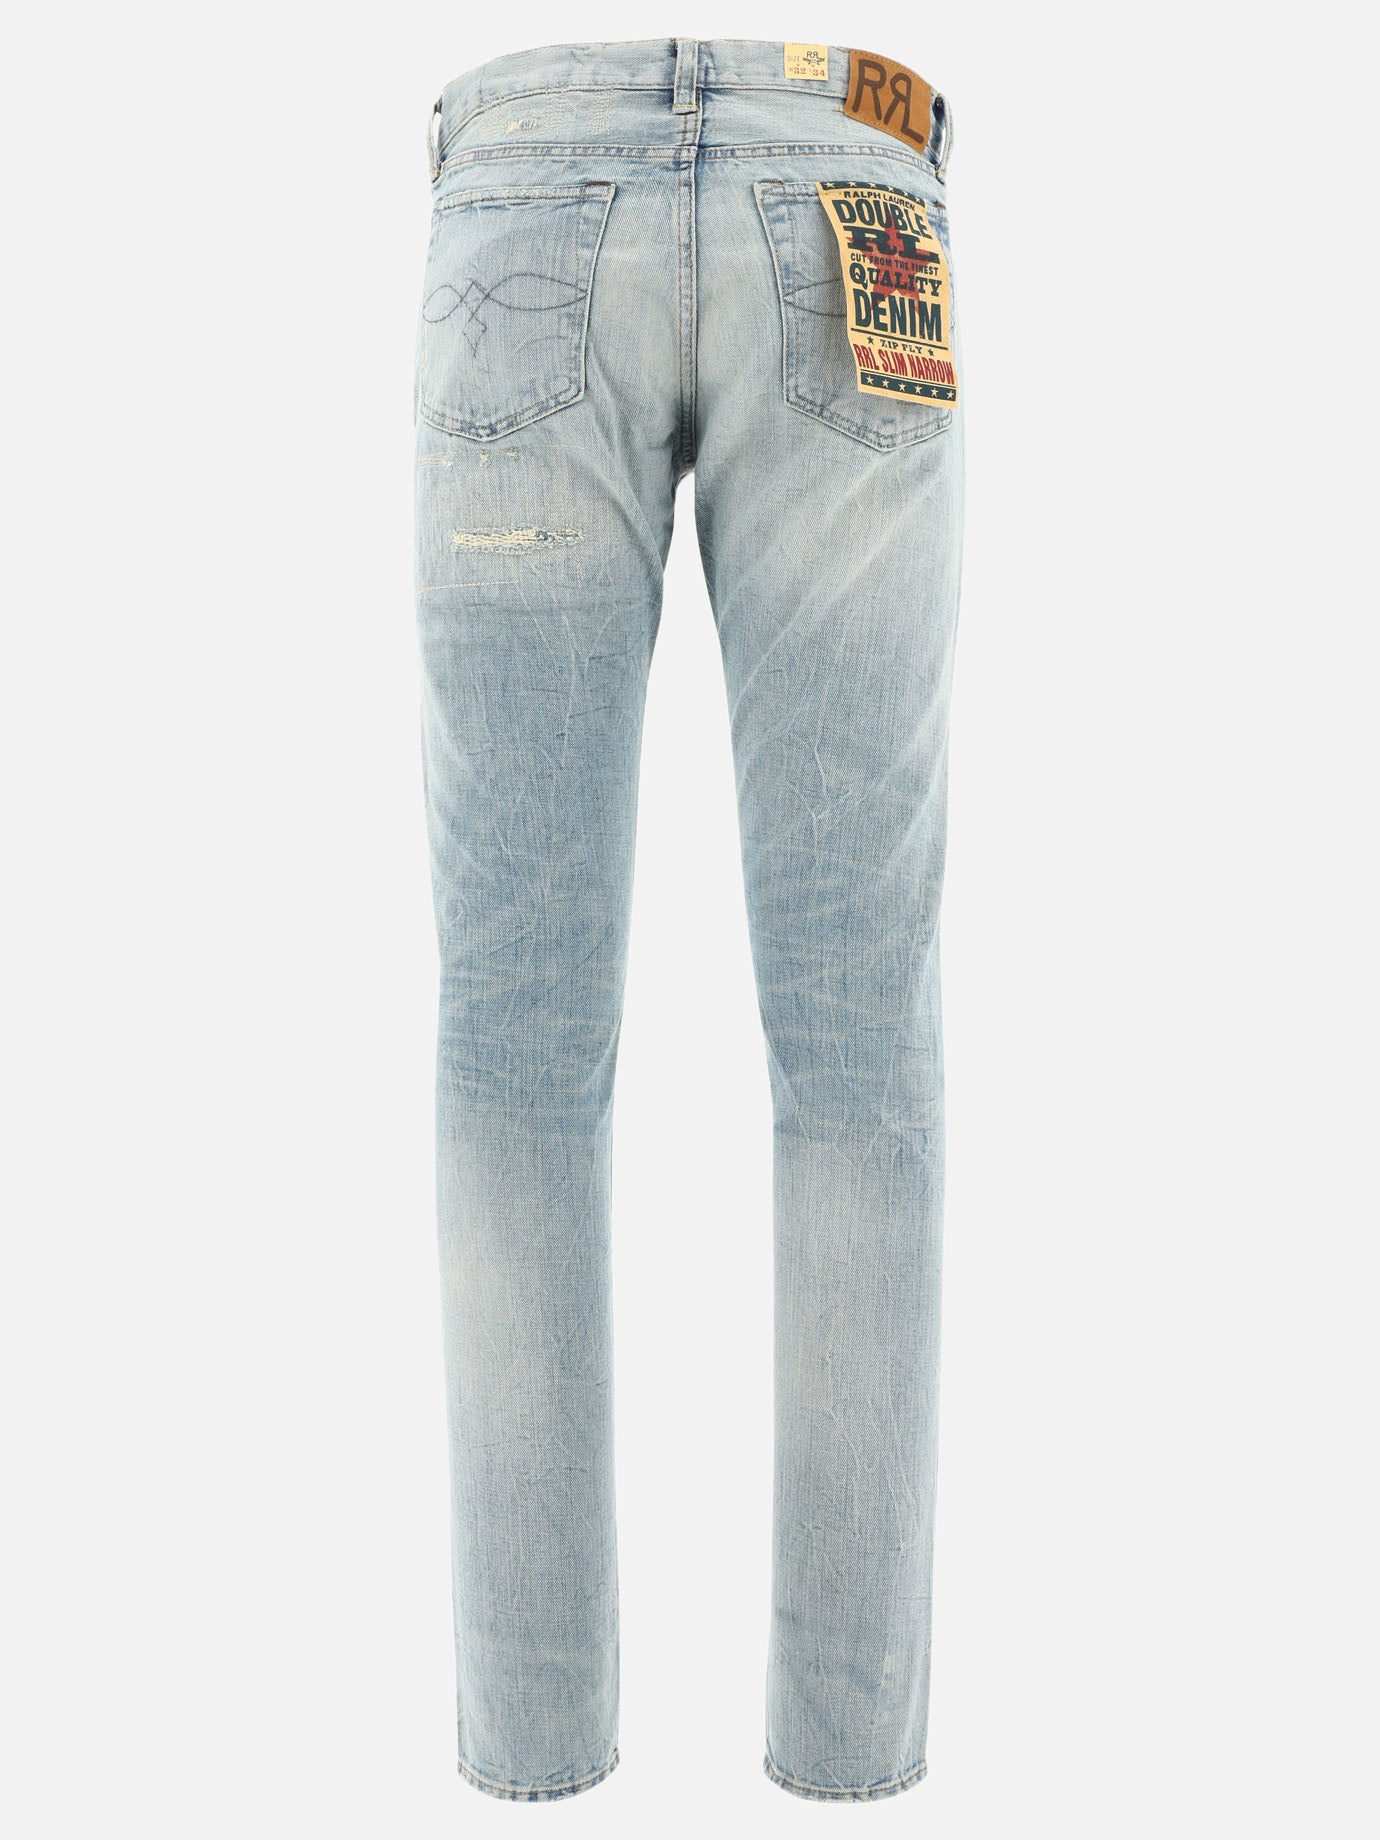 "Stratham" jeans